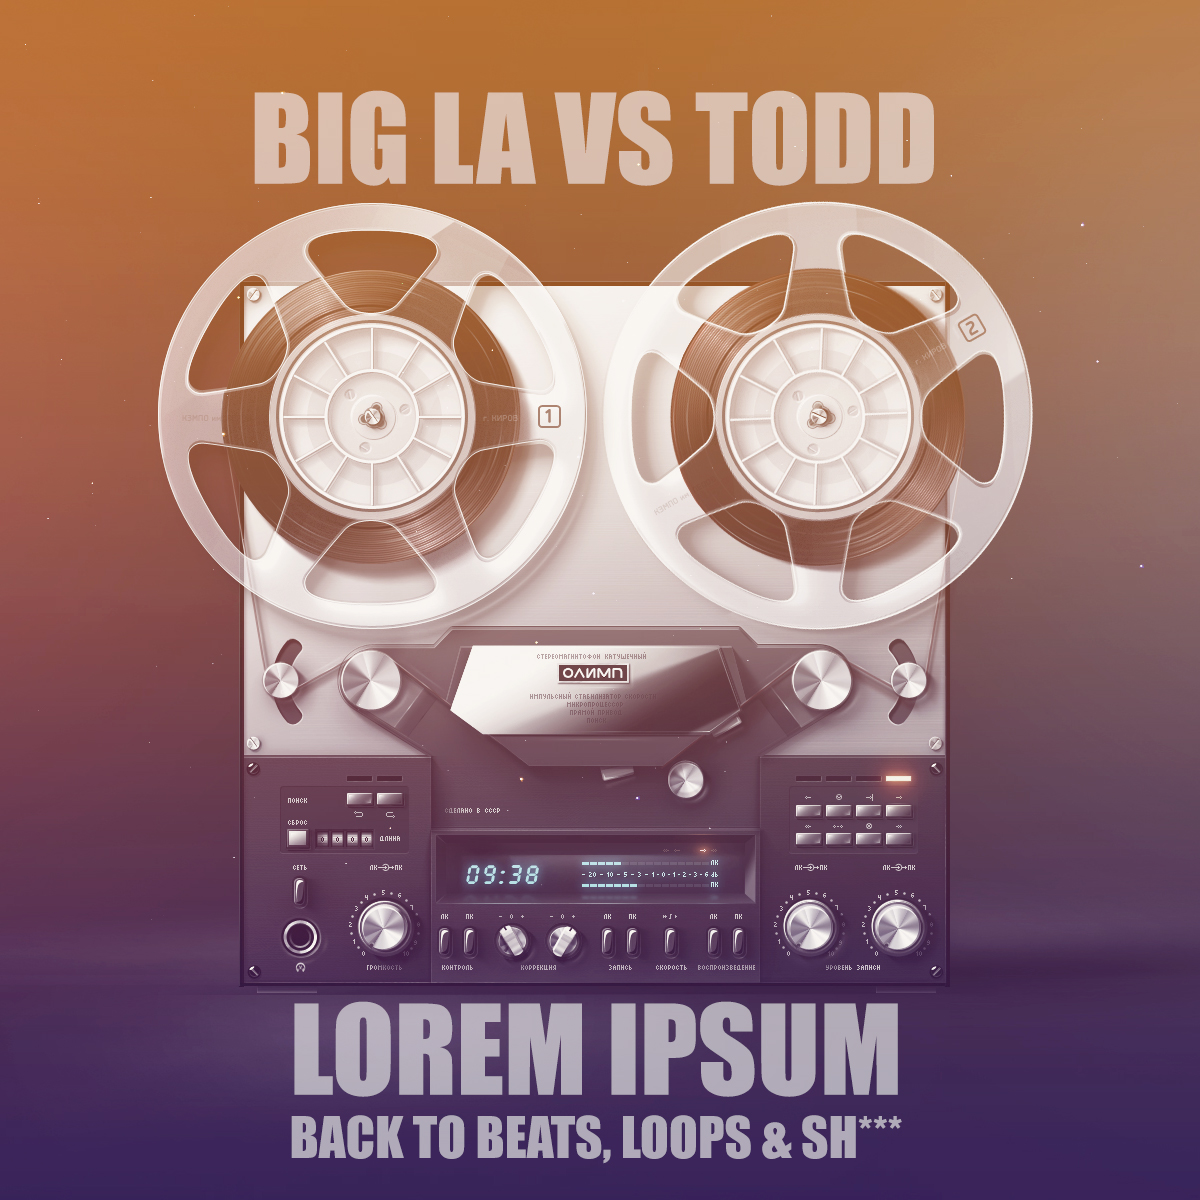 Free Download: Big La vs. Todd – Lorem Ipsum